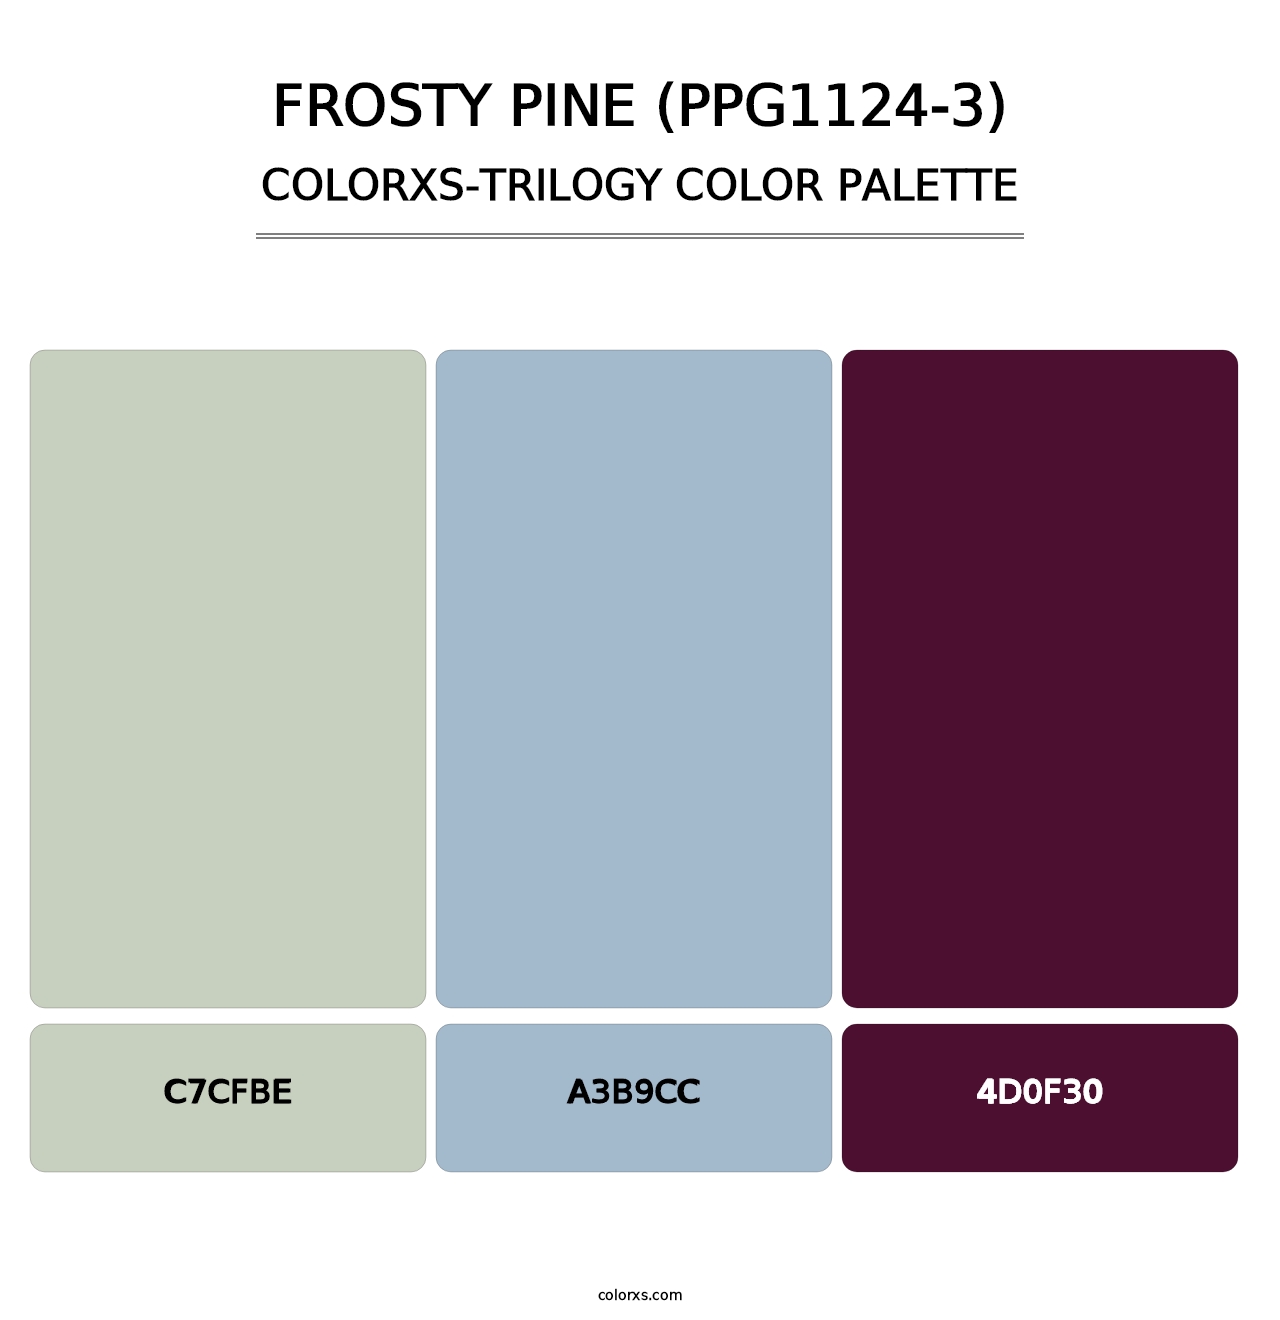 Frosty Pine (PPG1124-3) - Colorxs Trilogy Palette